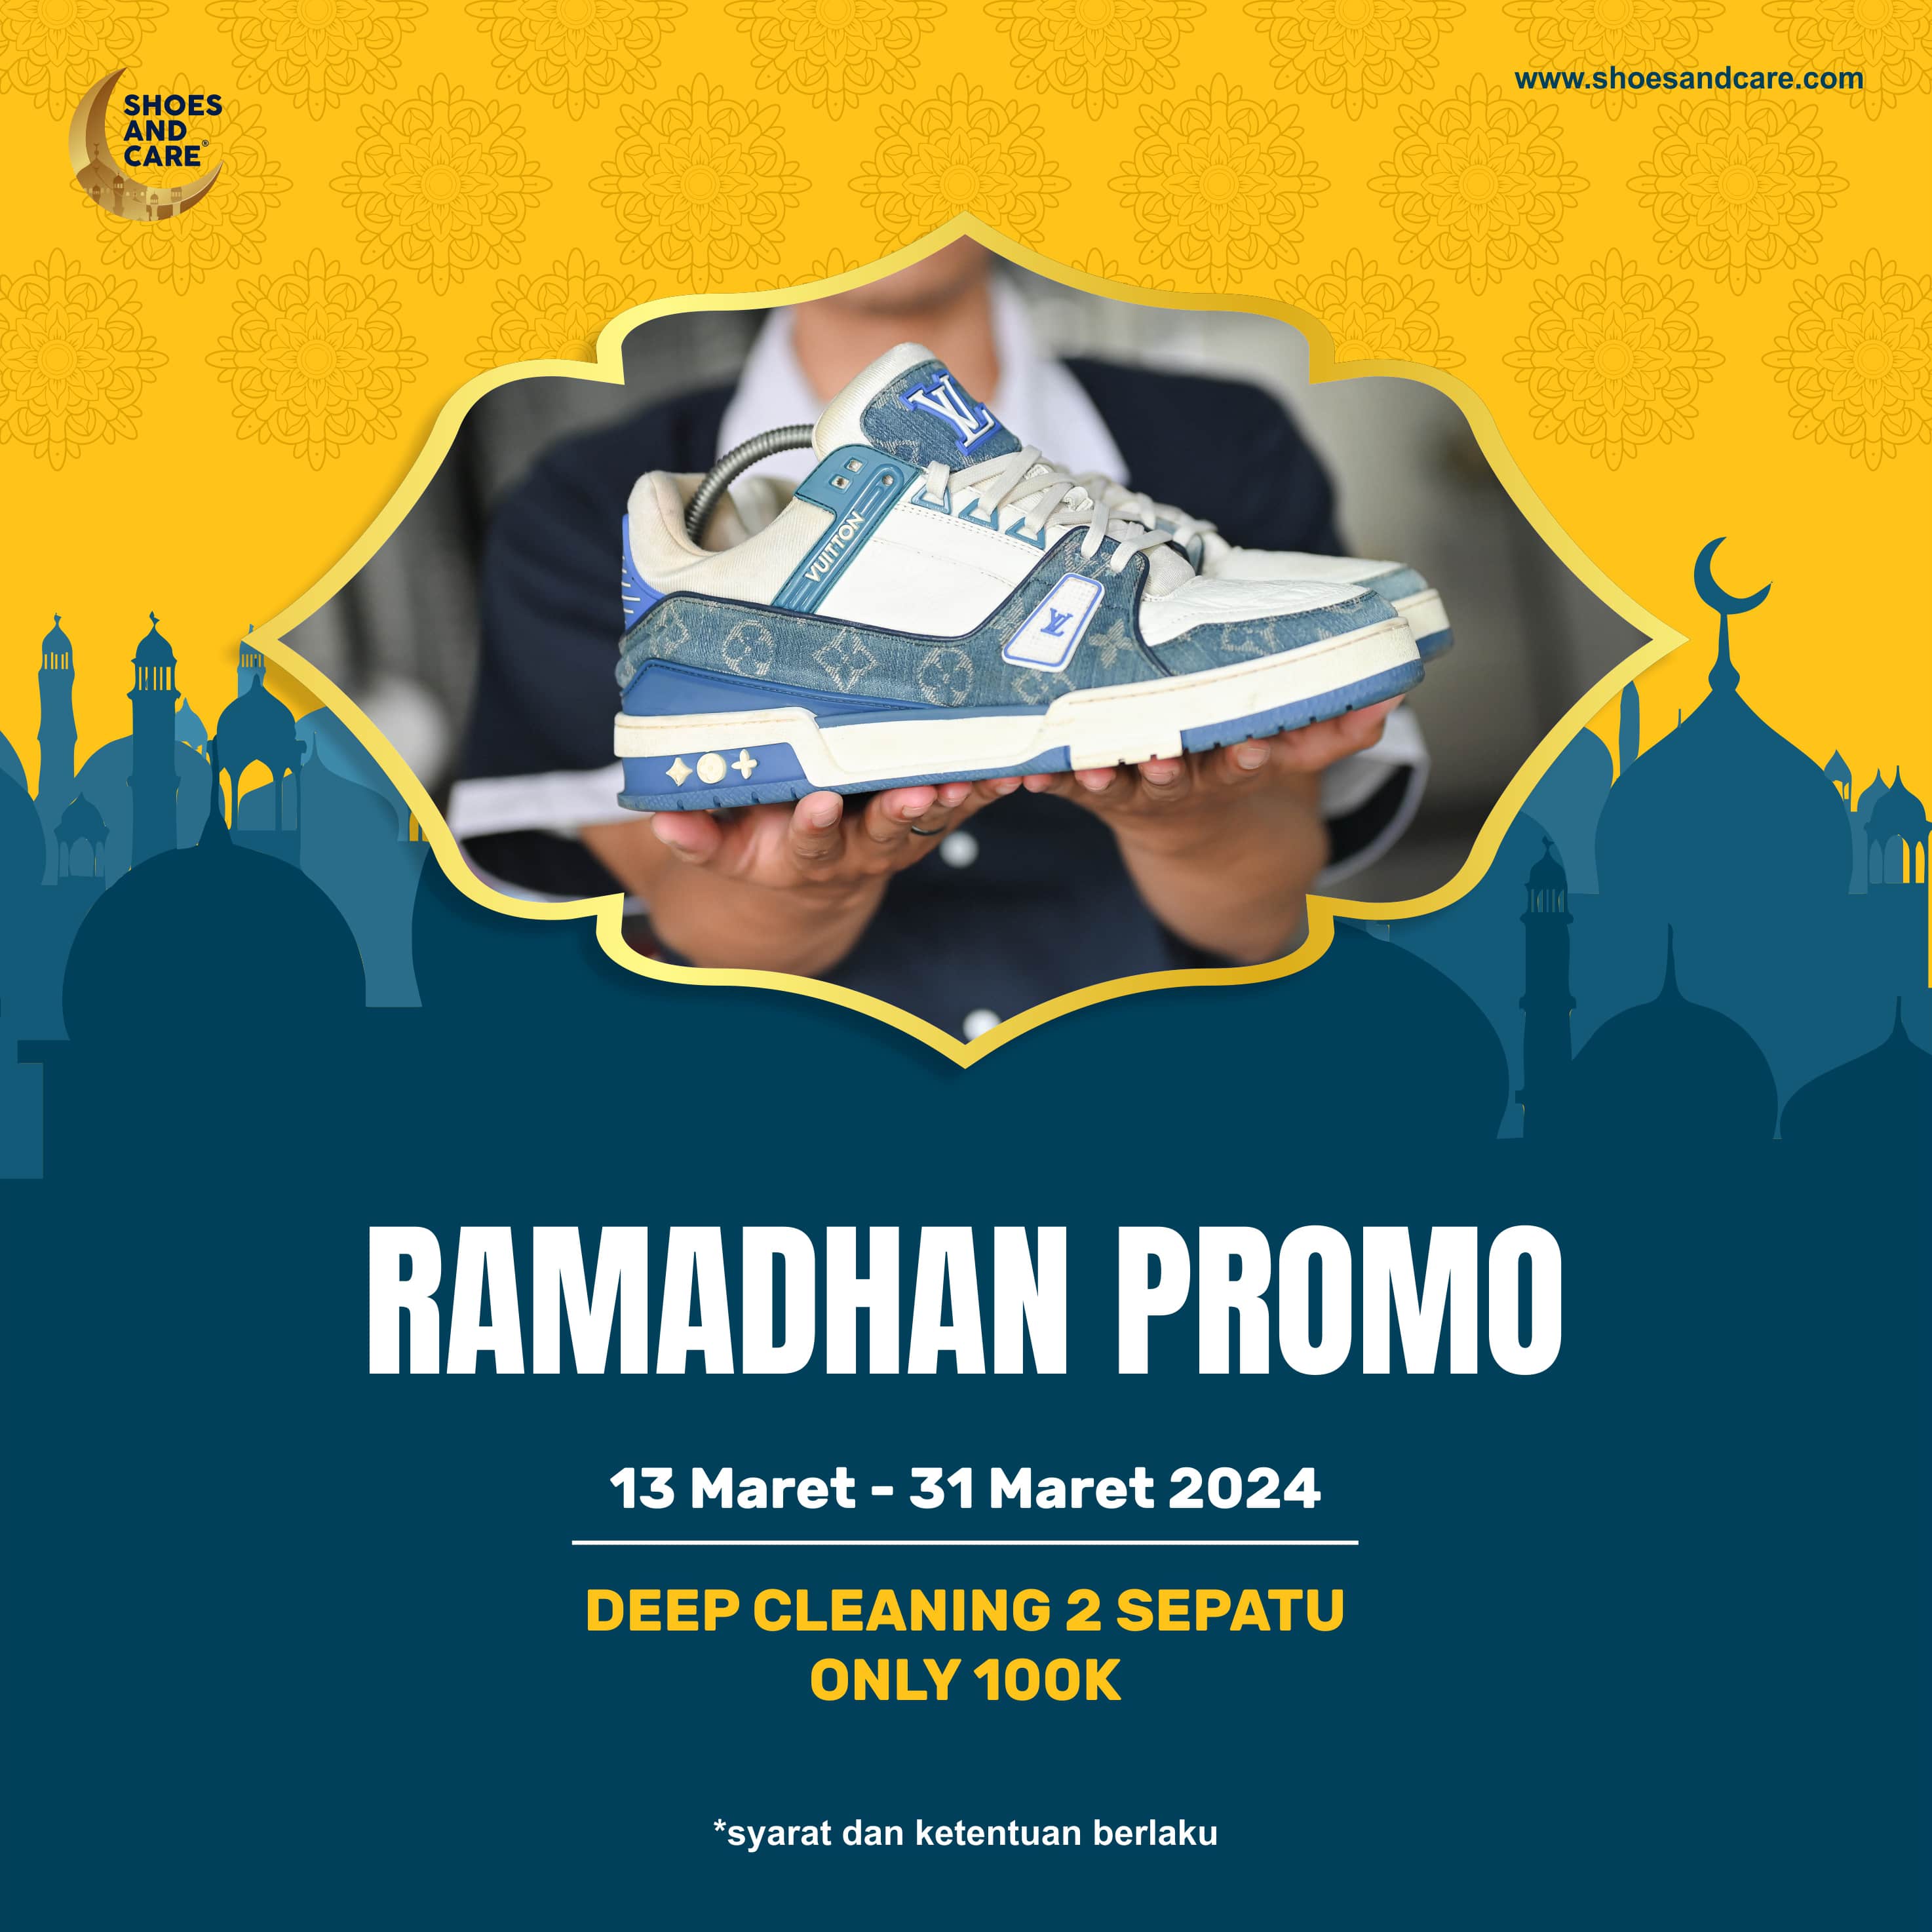 Promo Ramadhan 2 Sepatu 100K